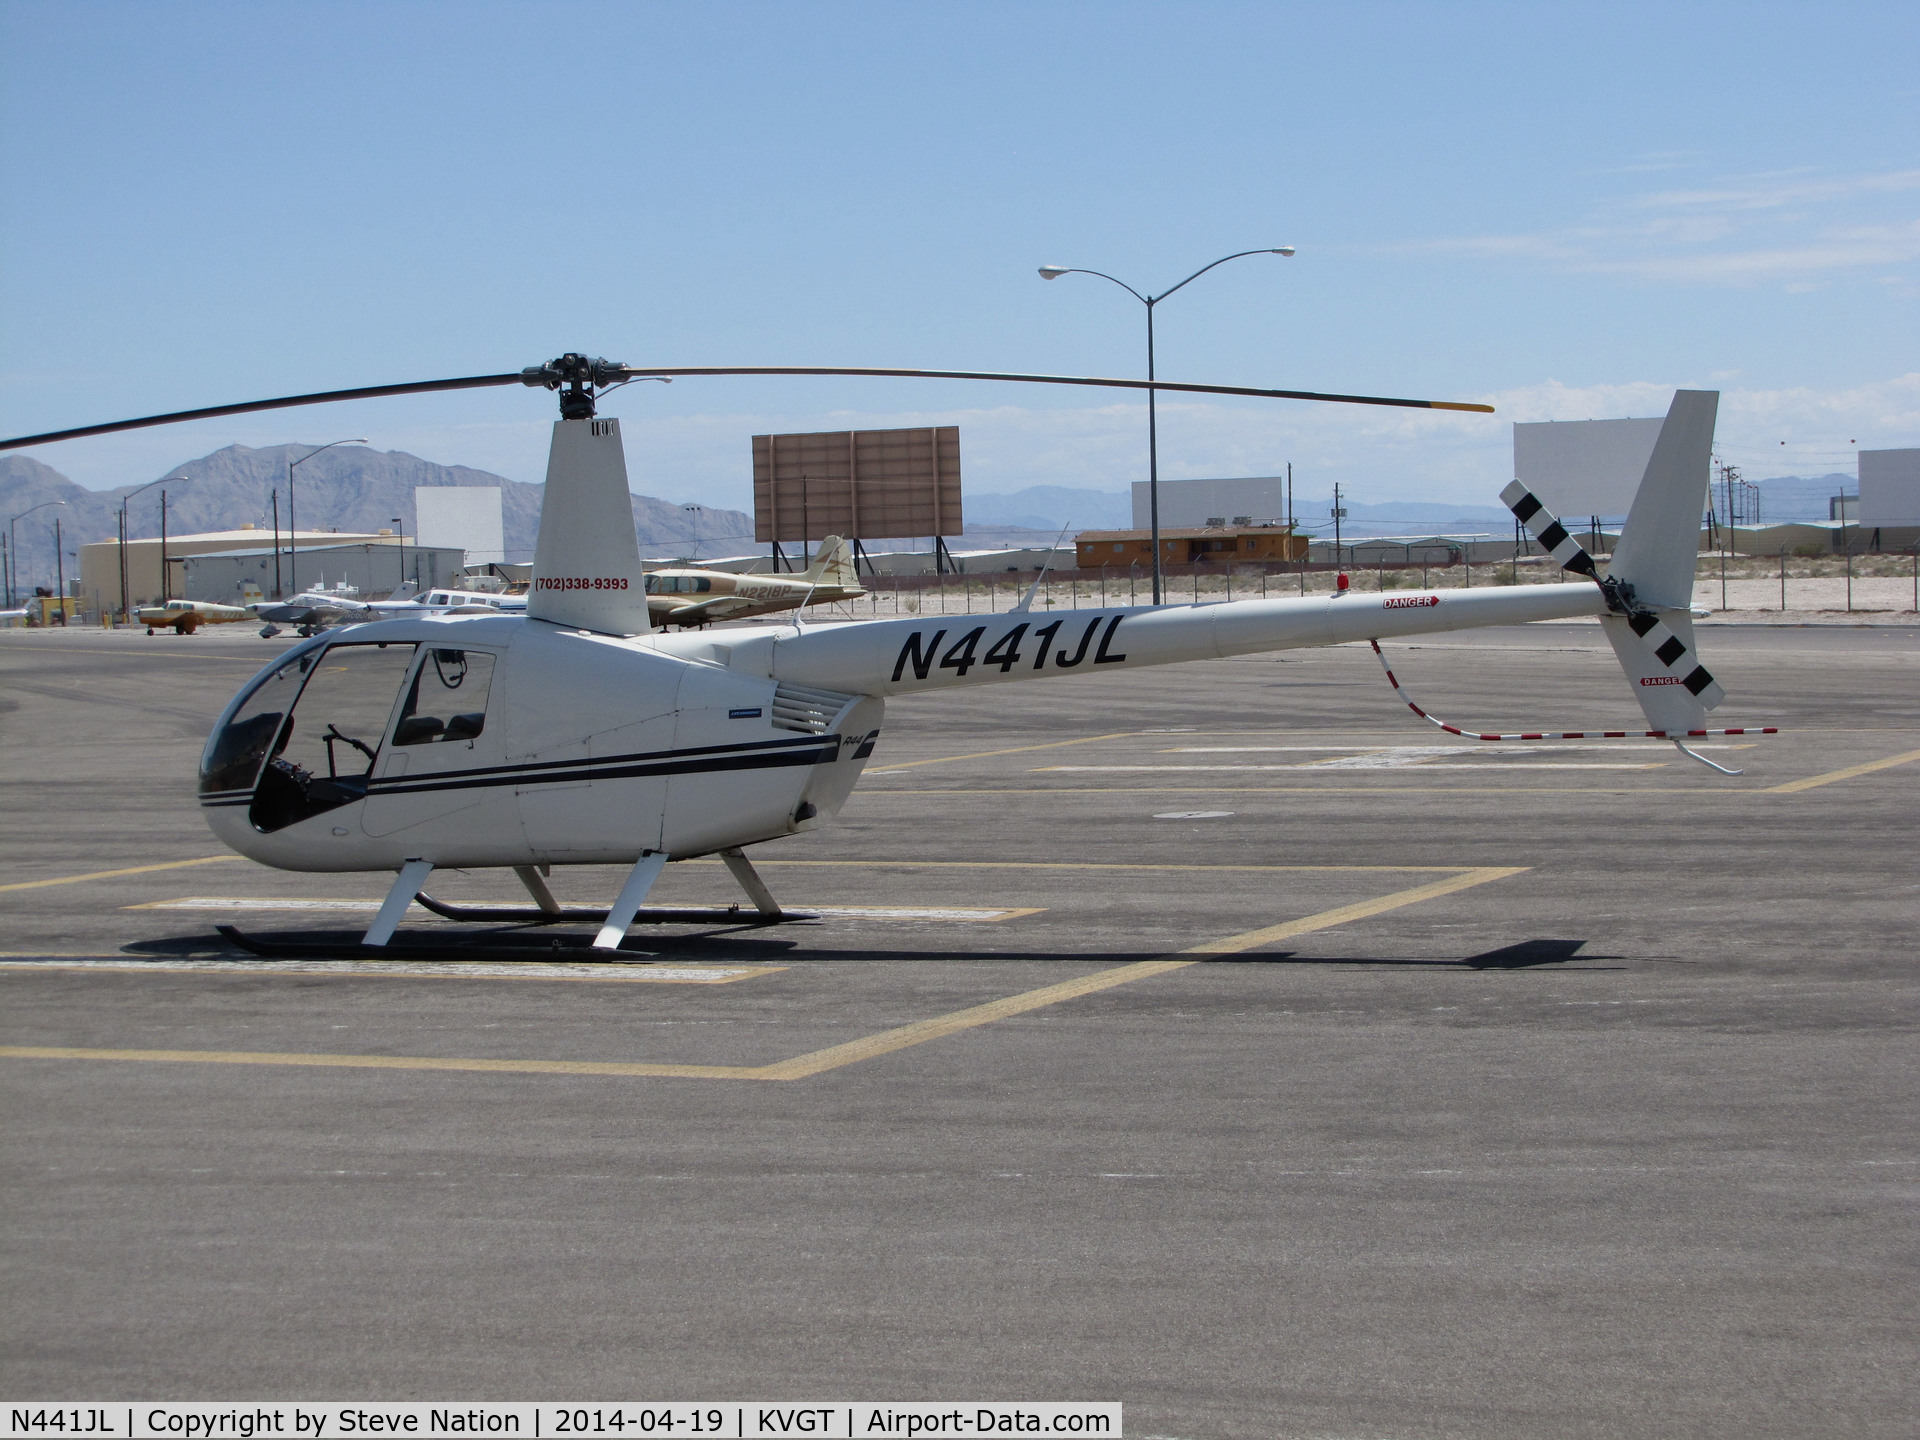 N441JL, 2000 Robinson R44 C/N 0842, Locally-based Robinson R44 @ North Las Vegas Airport, NV